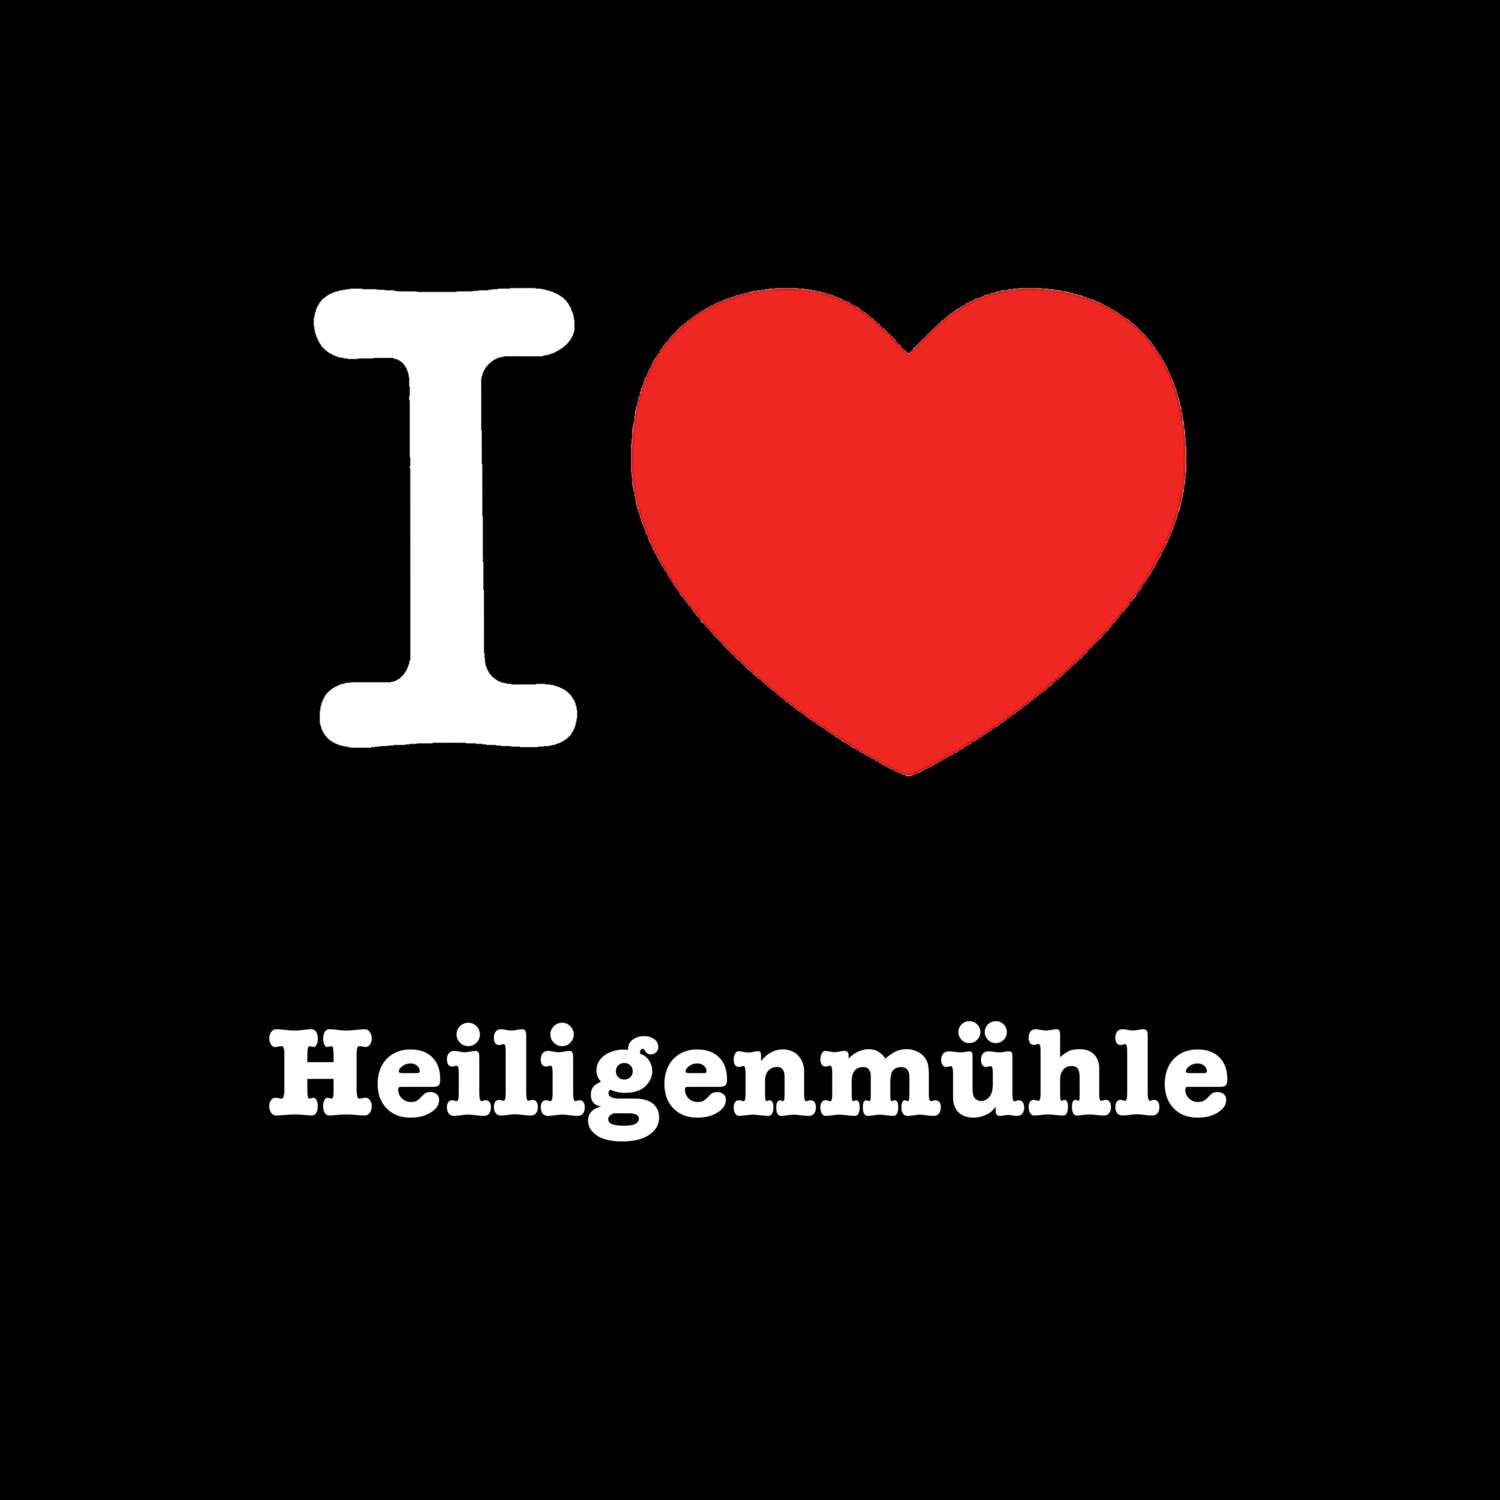 Heiligenmühle T-Shirt »I love«